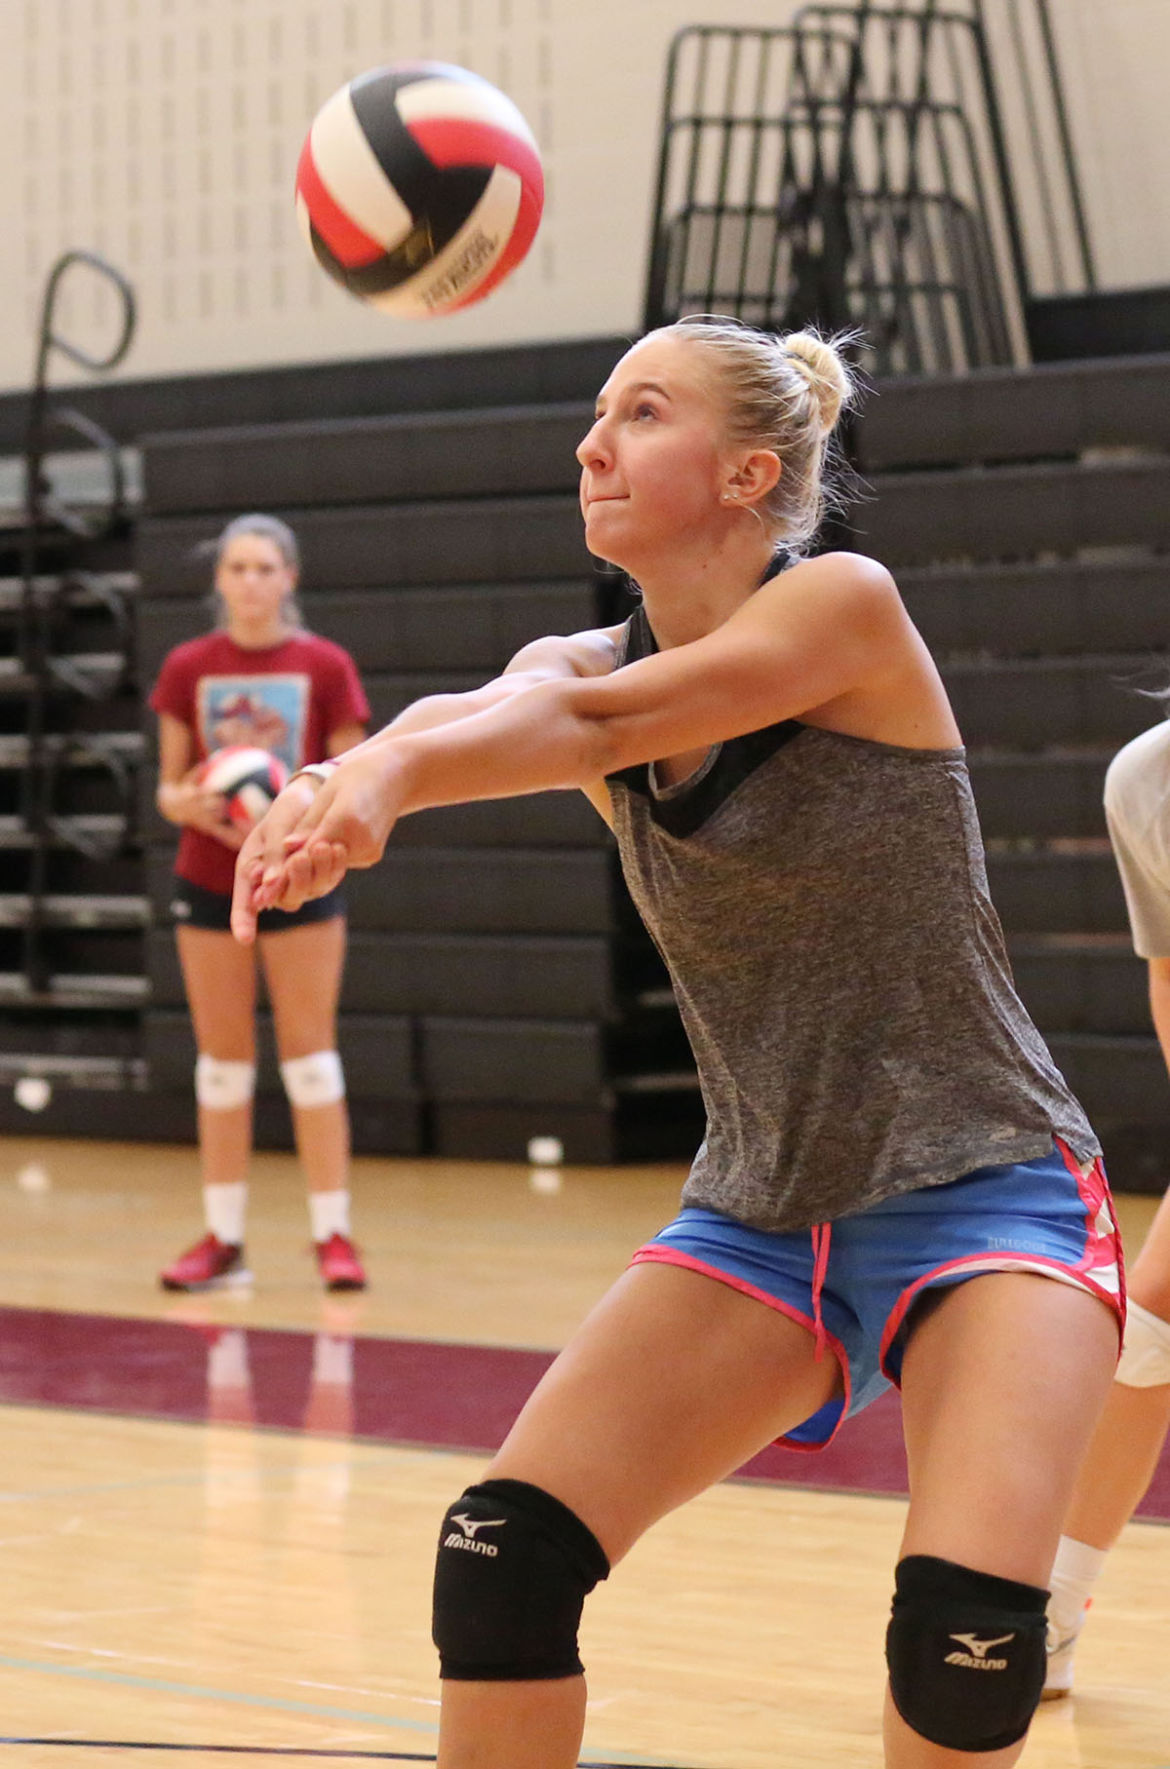 Photos: Scottsbluff High School Volleyball Practice | Sports News